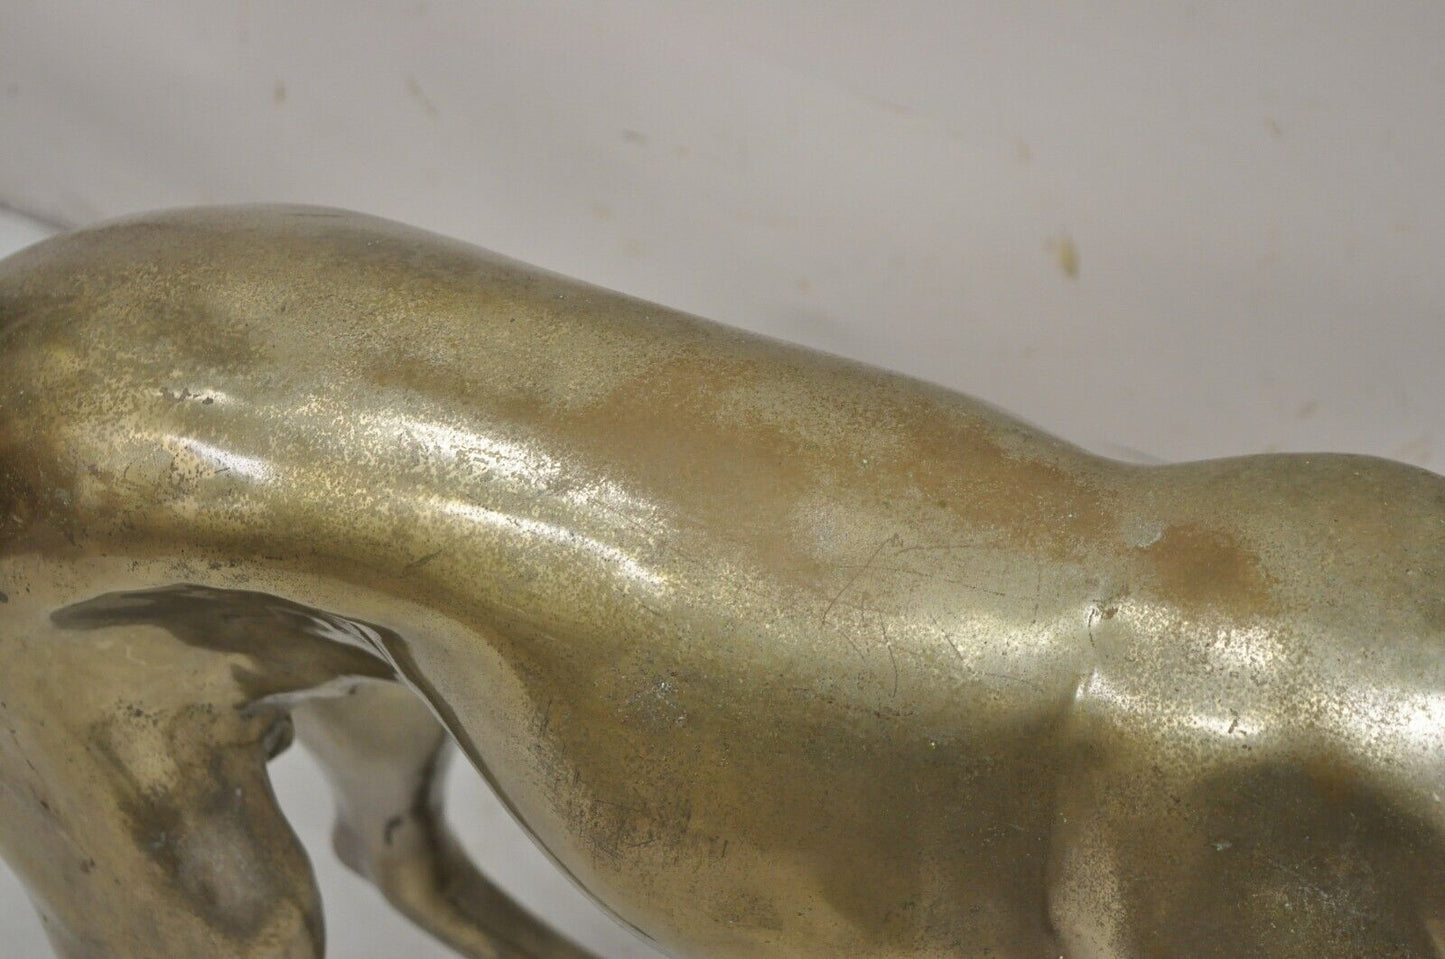 Vintage Hollywood Regency Life Size Brass Greyhound Whippet Dog Statue Sculpture